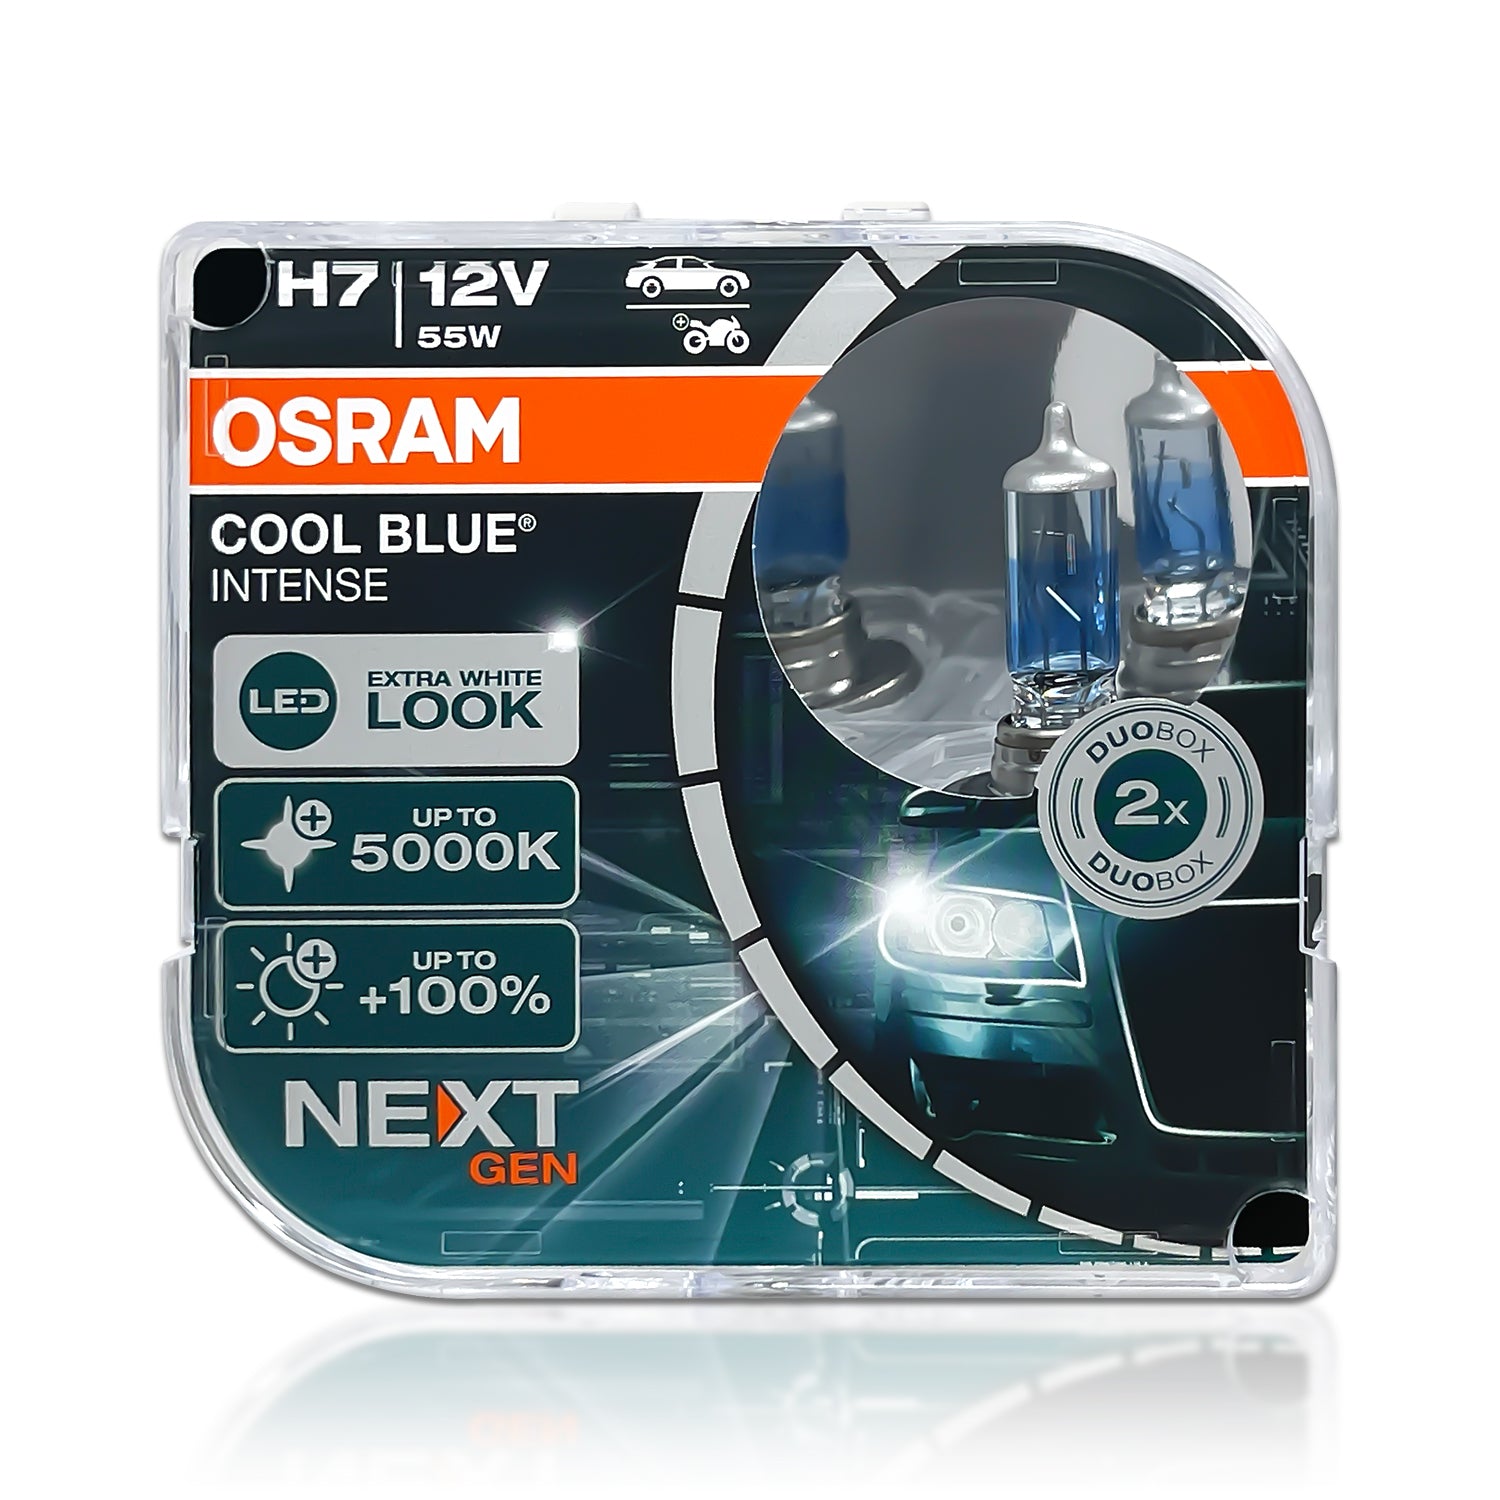 H7 12V 55W Cool Blue Intense